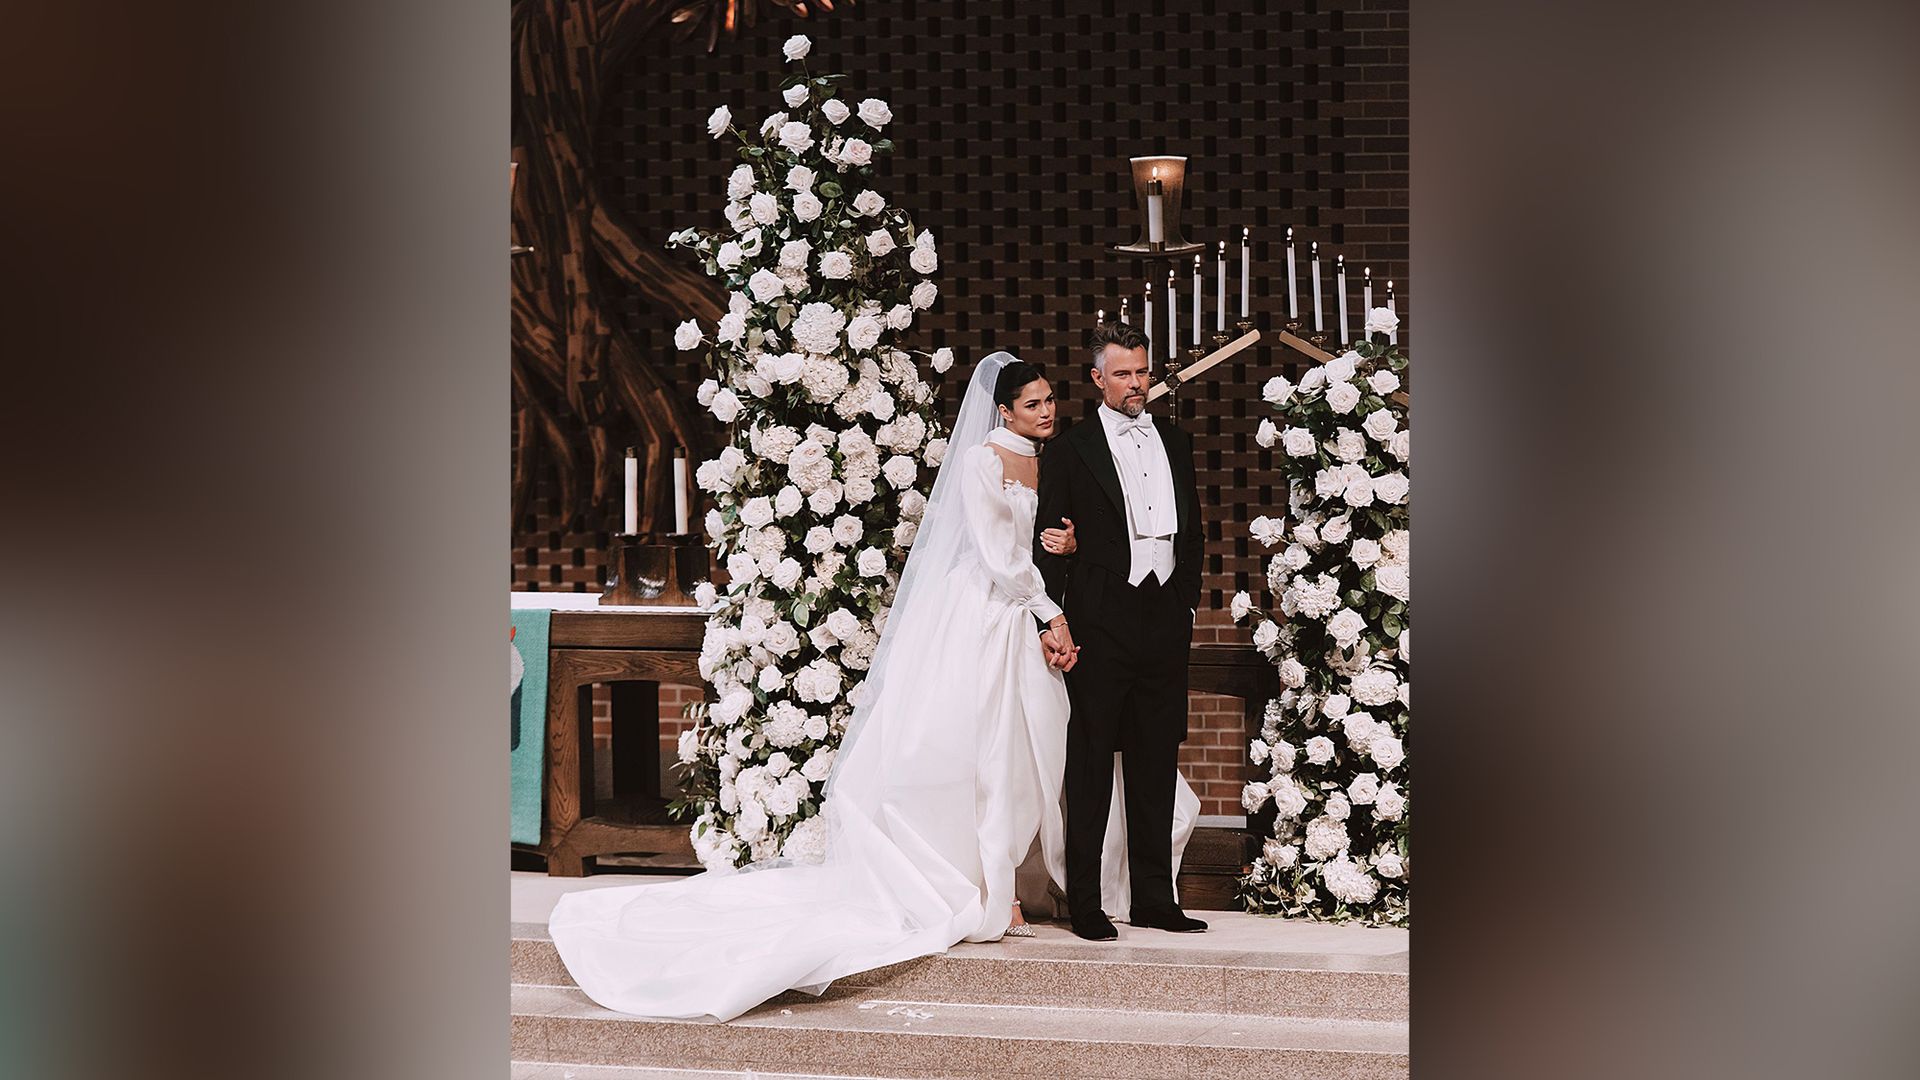 Josh Duhamel and Audra Mari's wedding